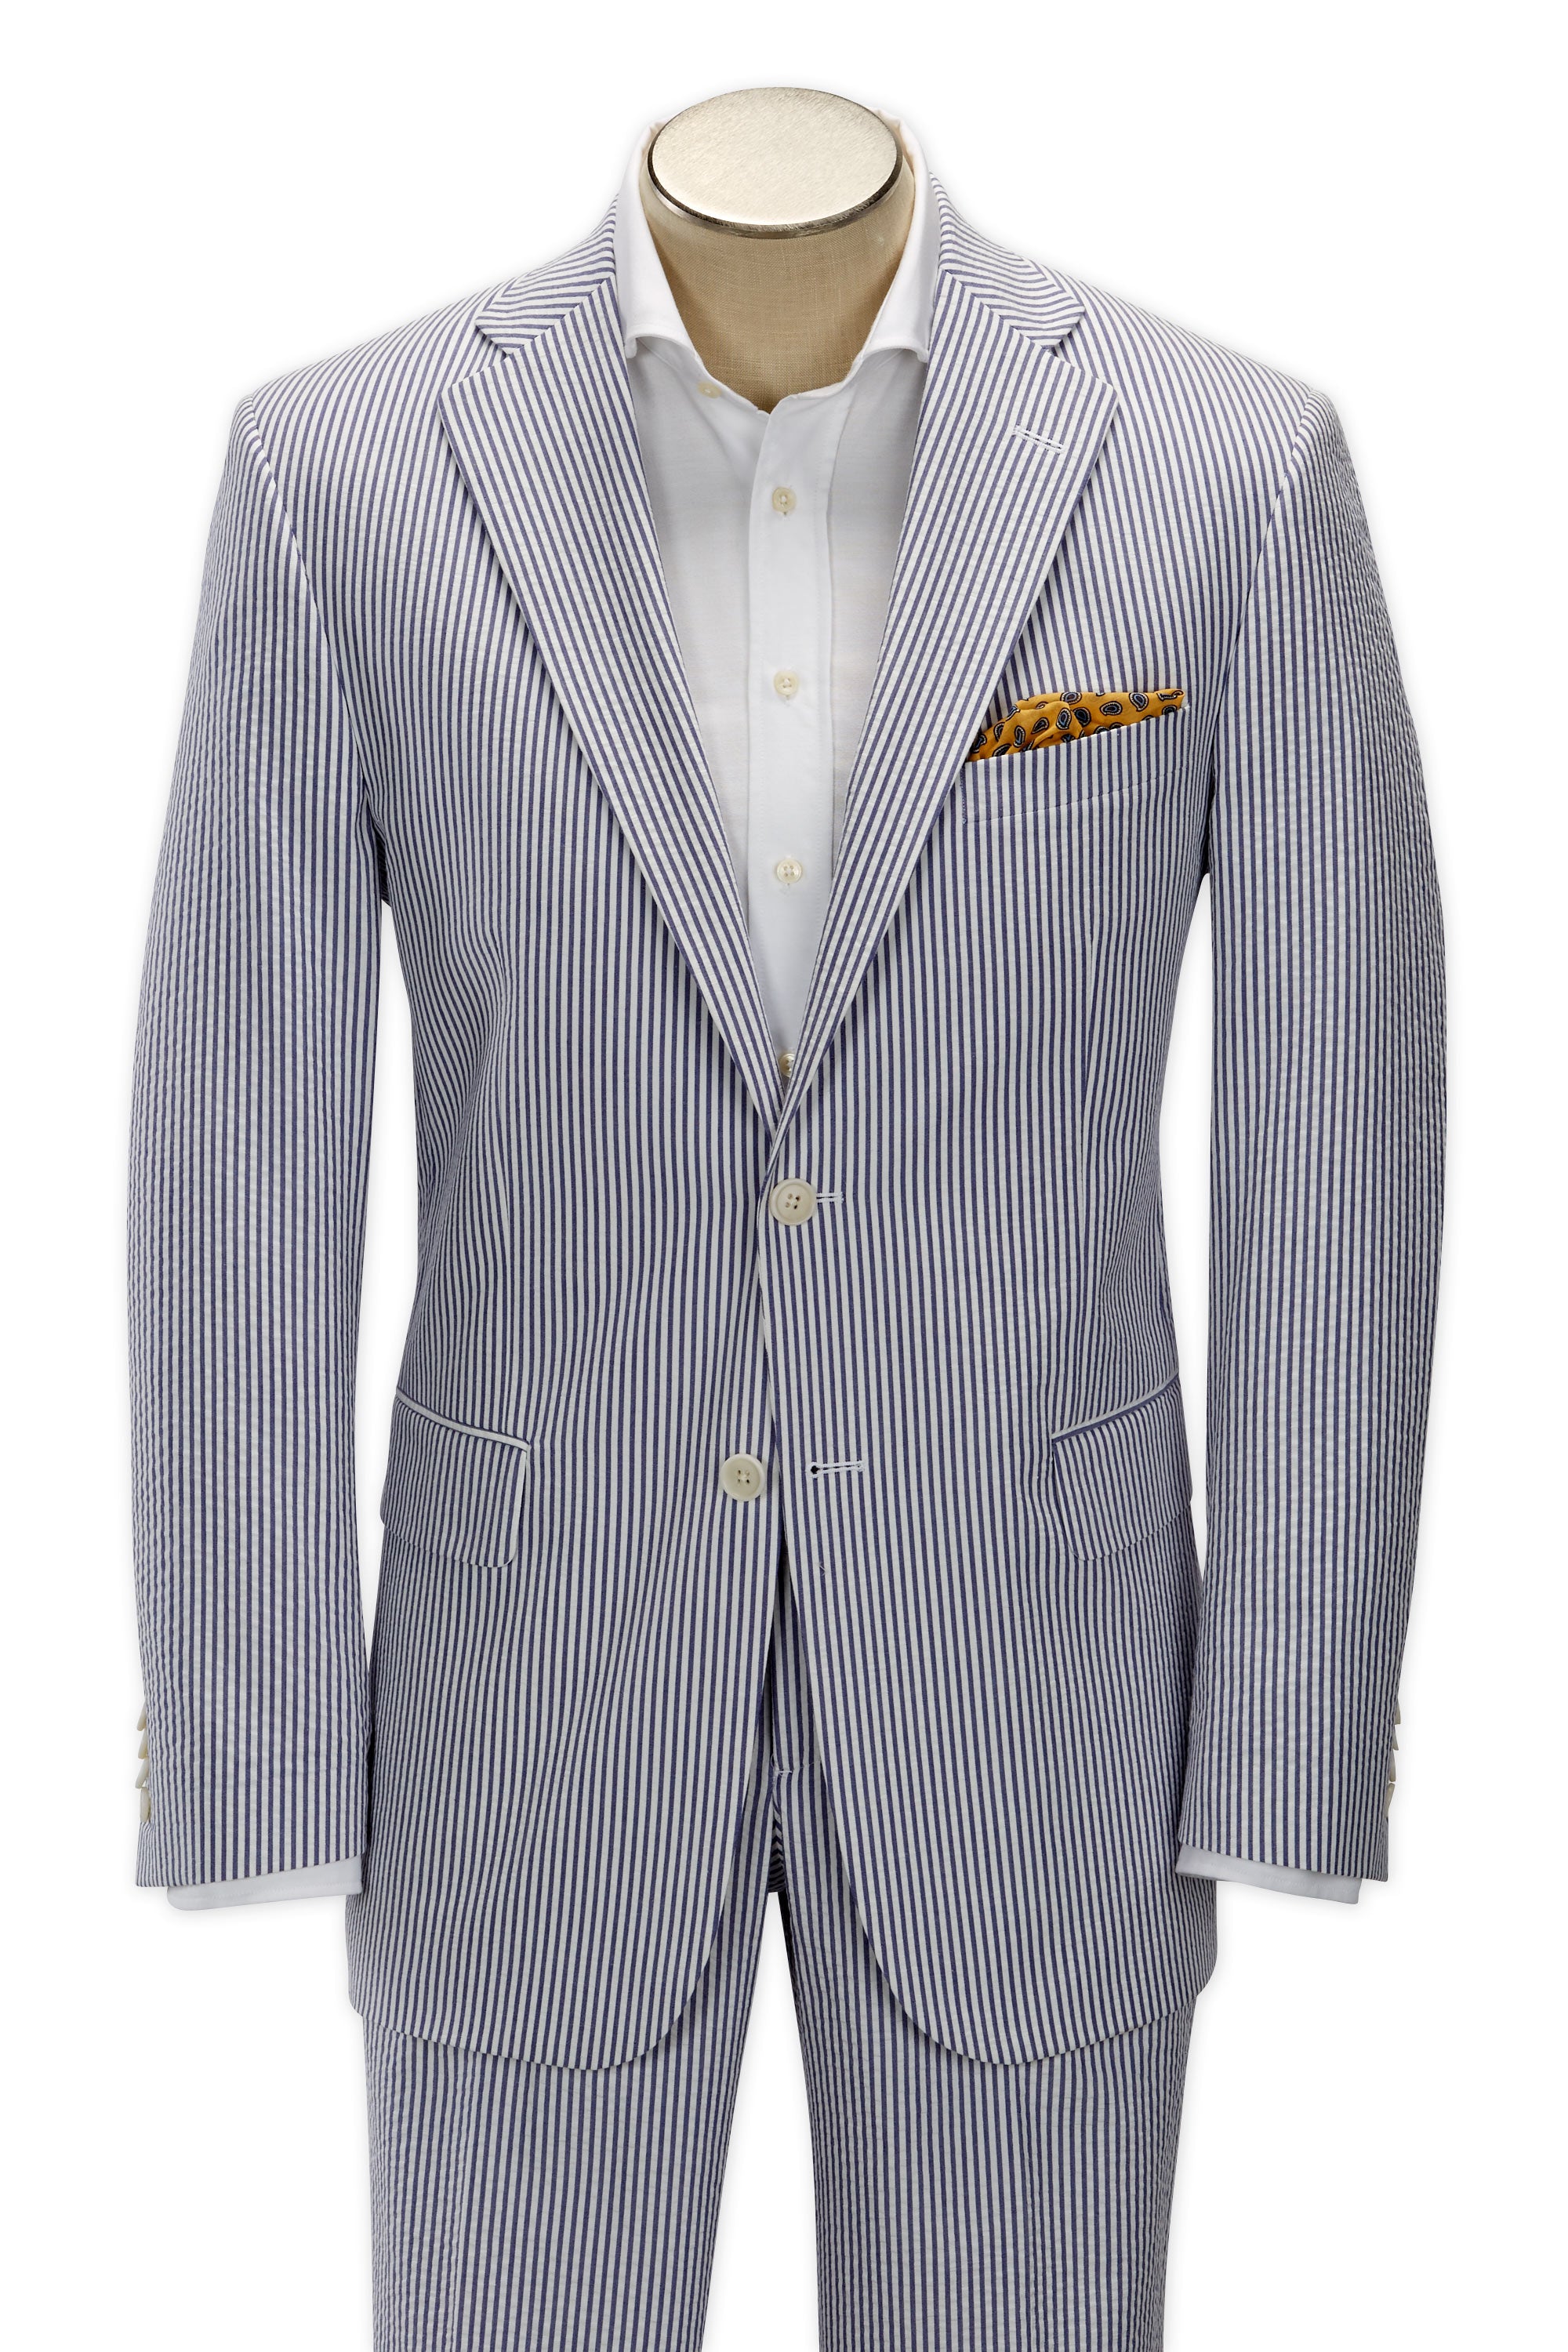 Men's Sport Coat  - Suit Separate Classic Cut BLUE SEERSUCKER 100% COTTON